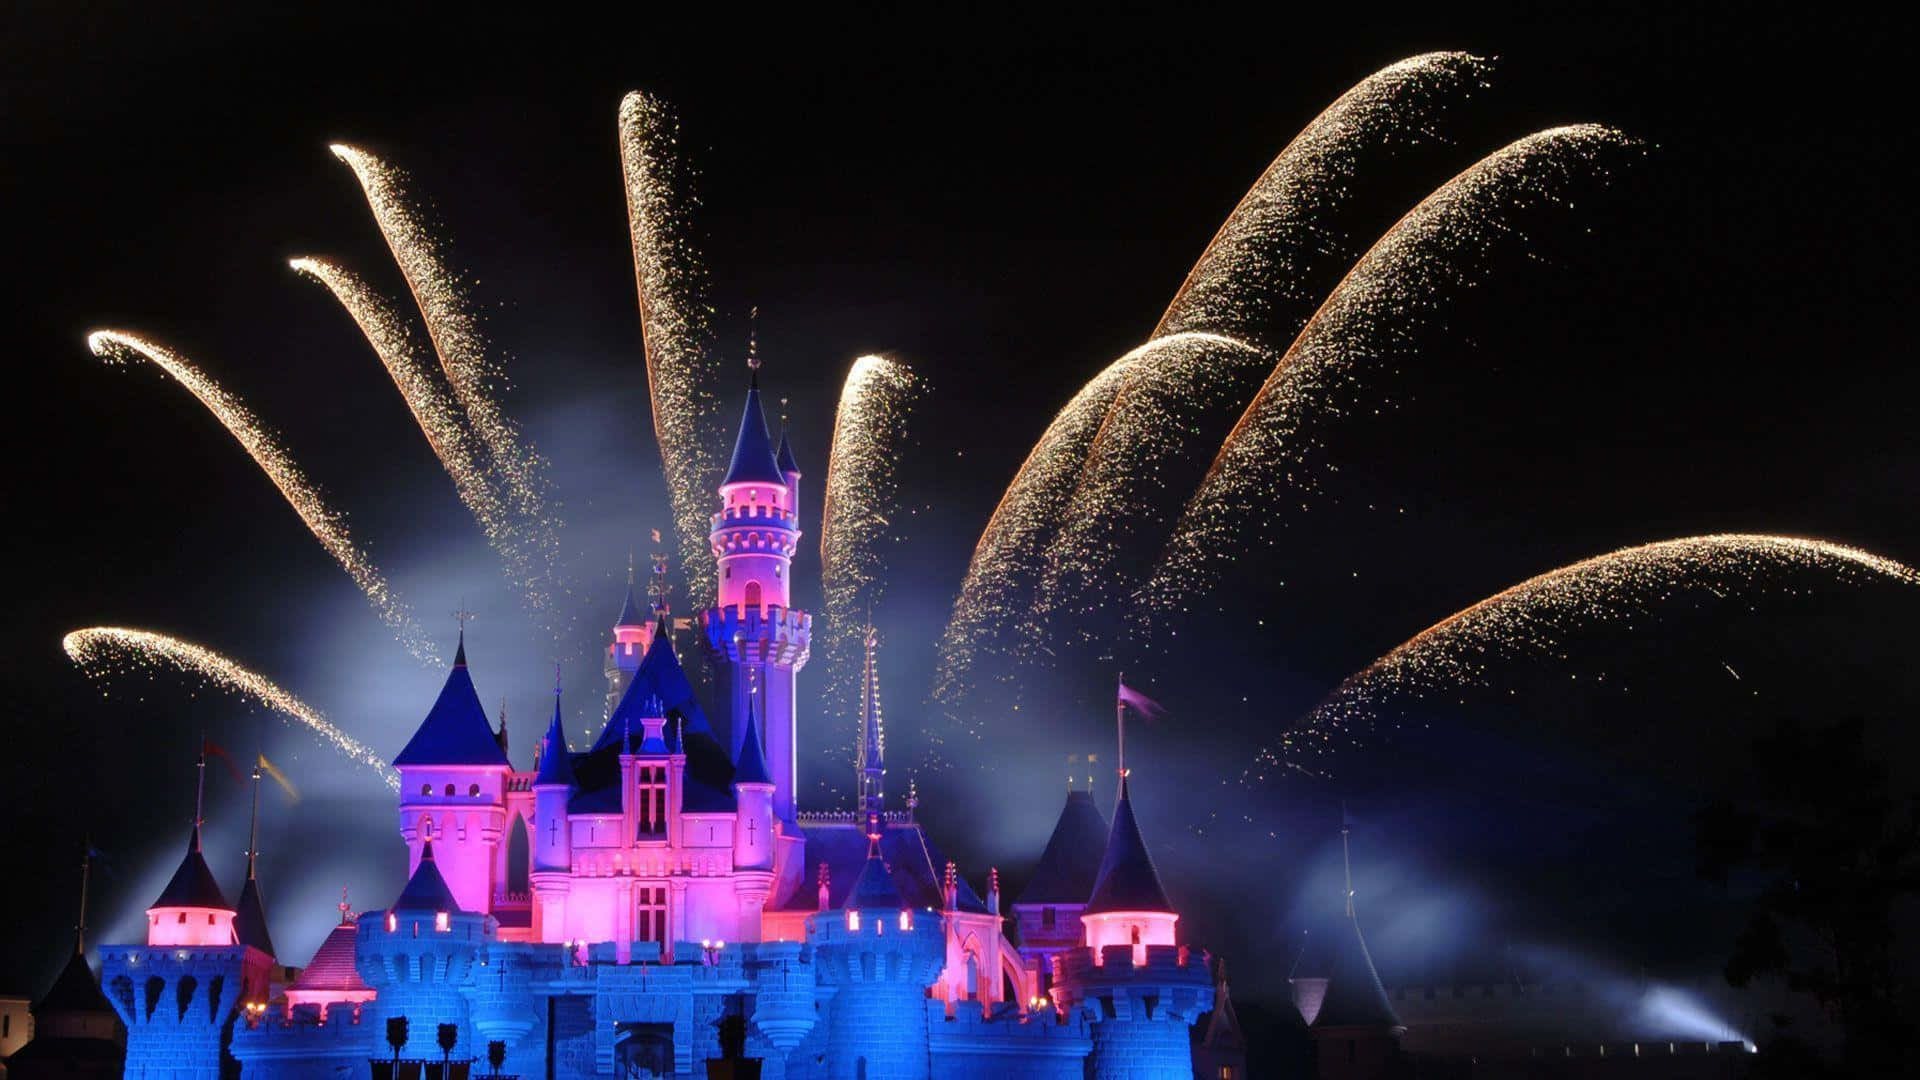 Enjoy the Magic of Disneyland!